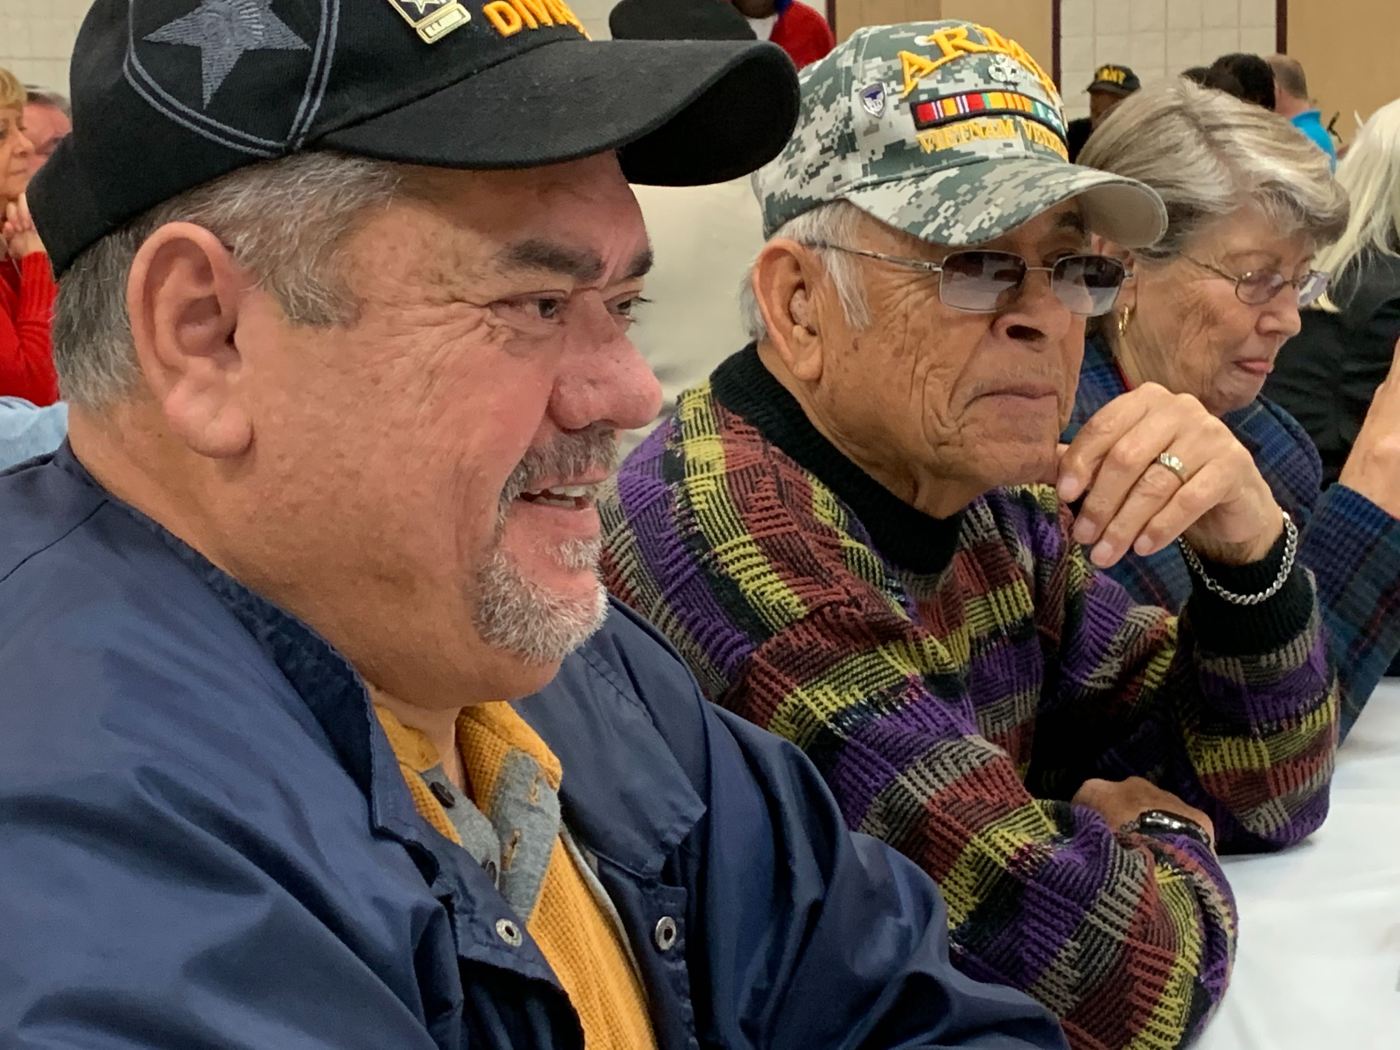 Veterans find assistance, camaraderie at Vet Centers